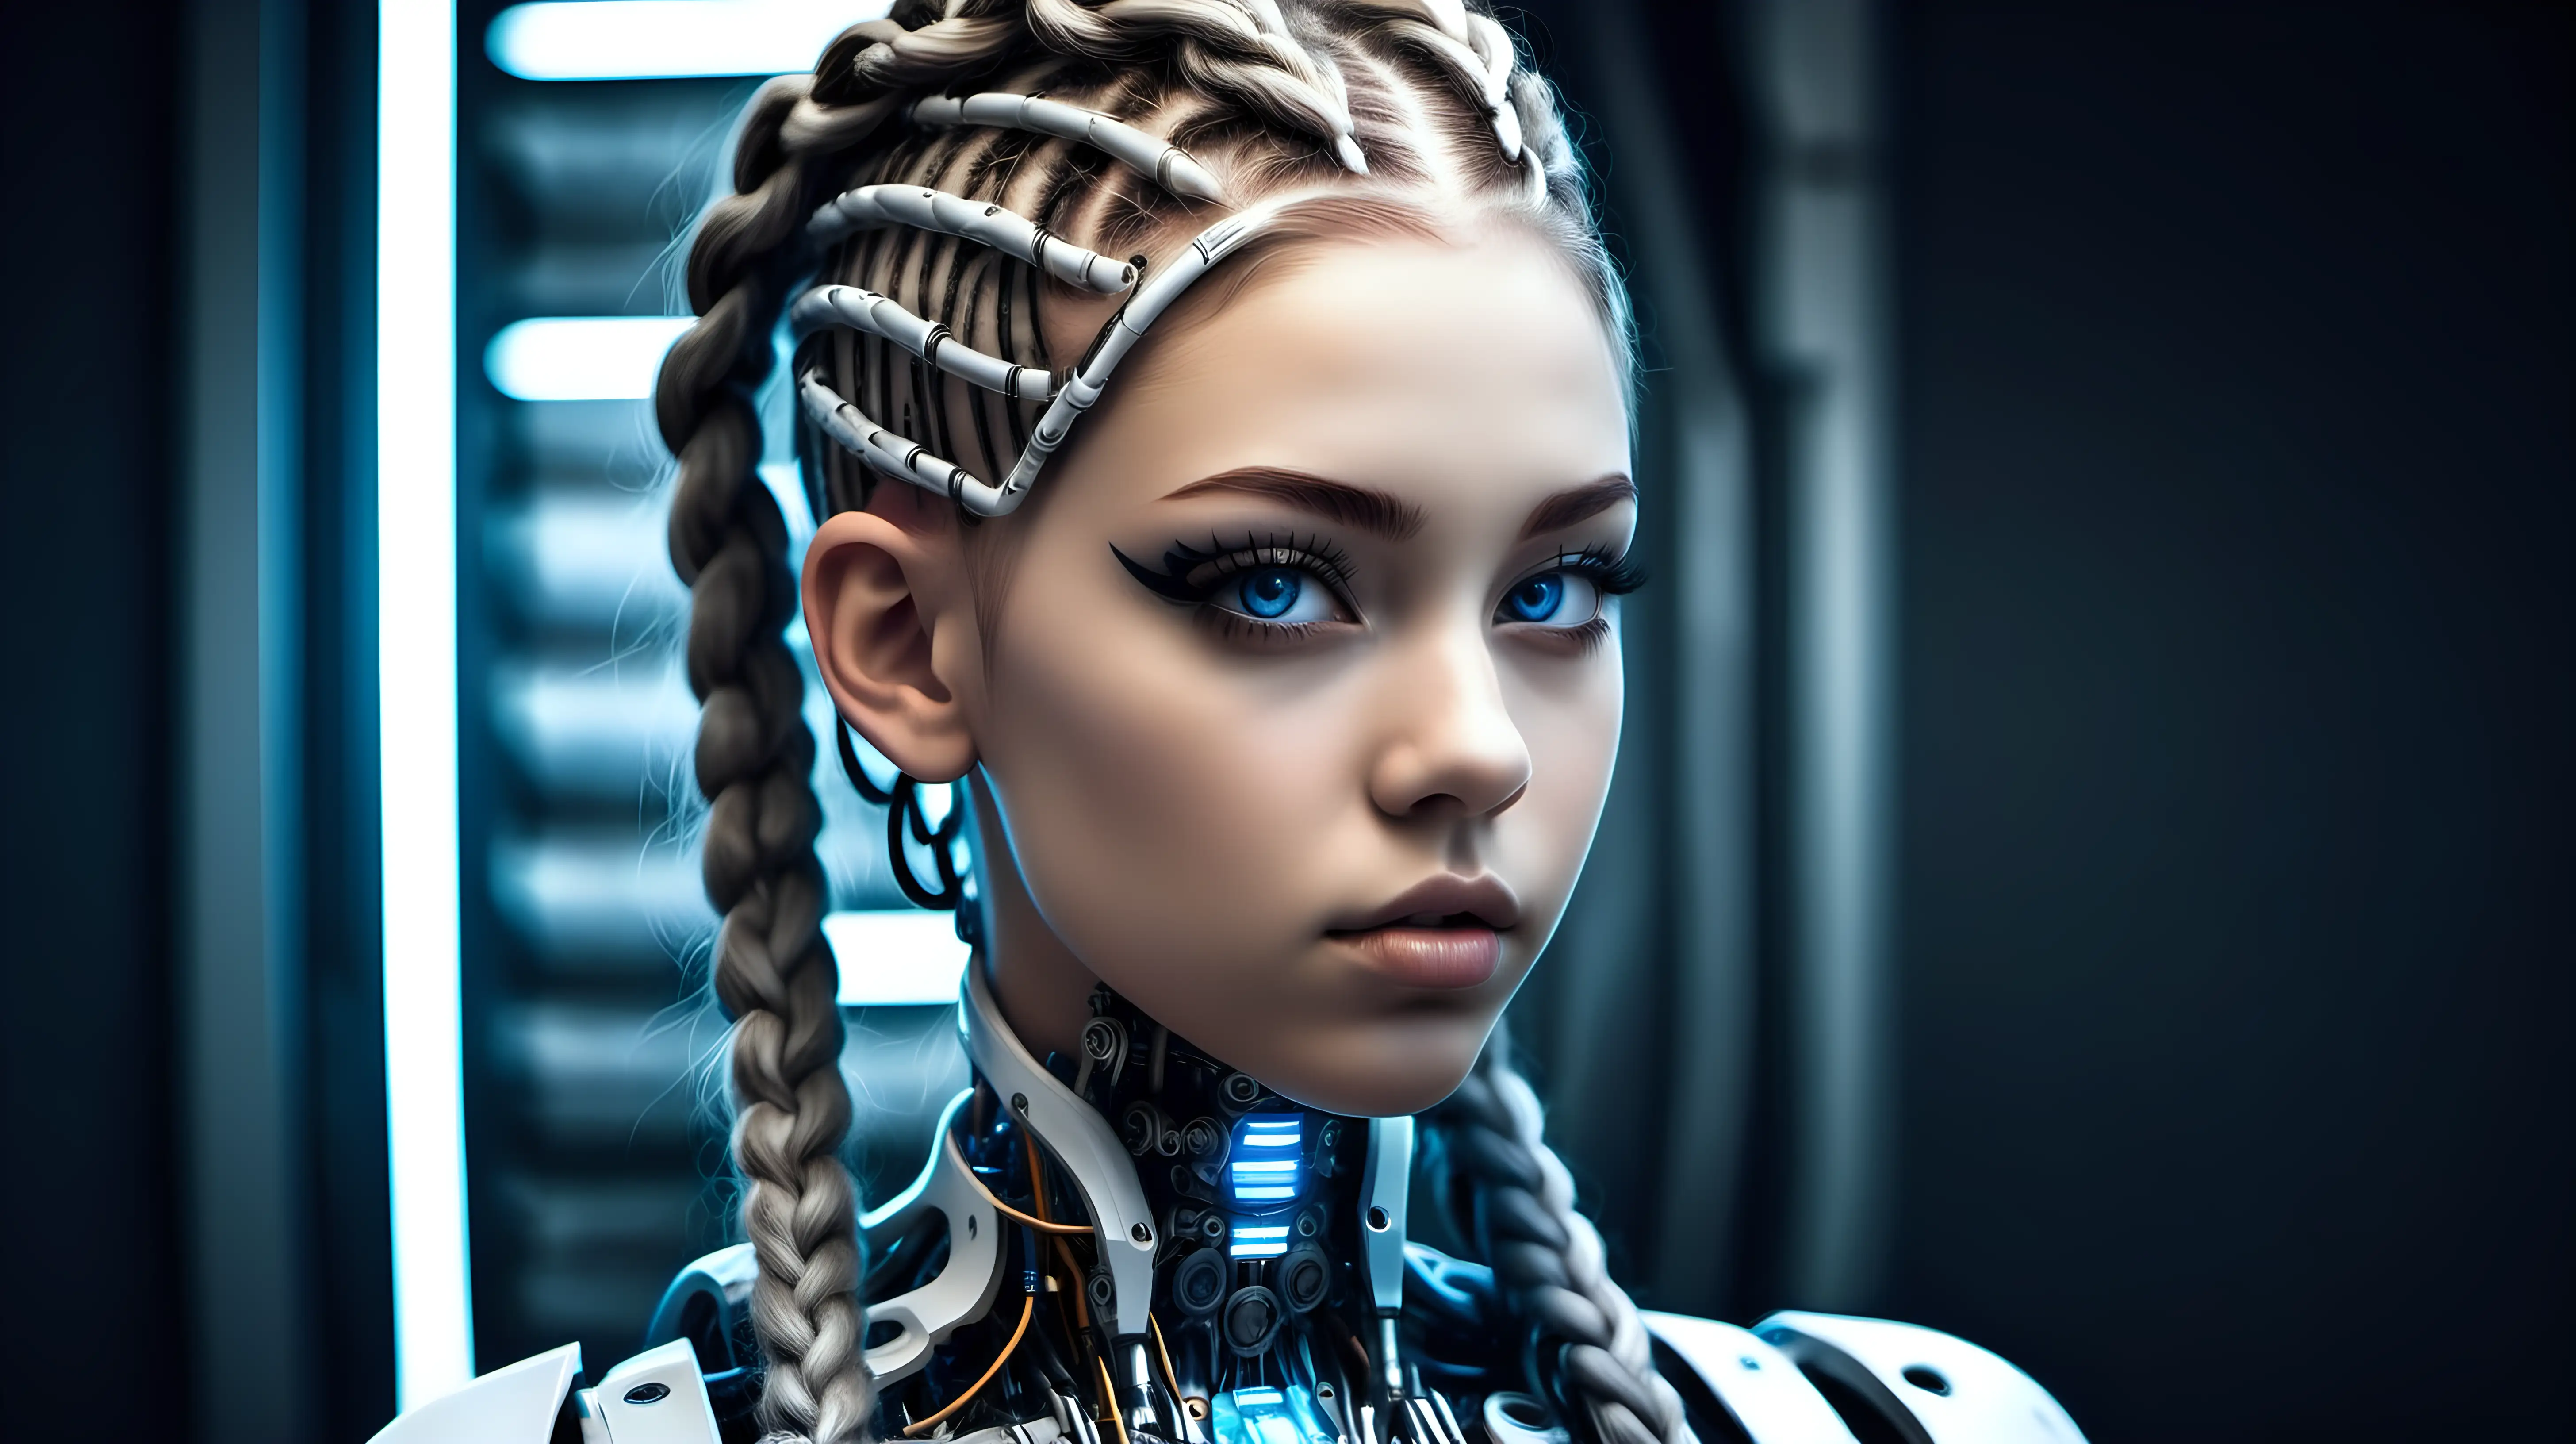 Futuristic Beauty Stunning 18YearOld European Cyborg Woman with Futuristic Braids